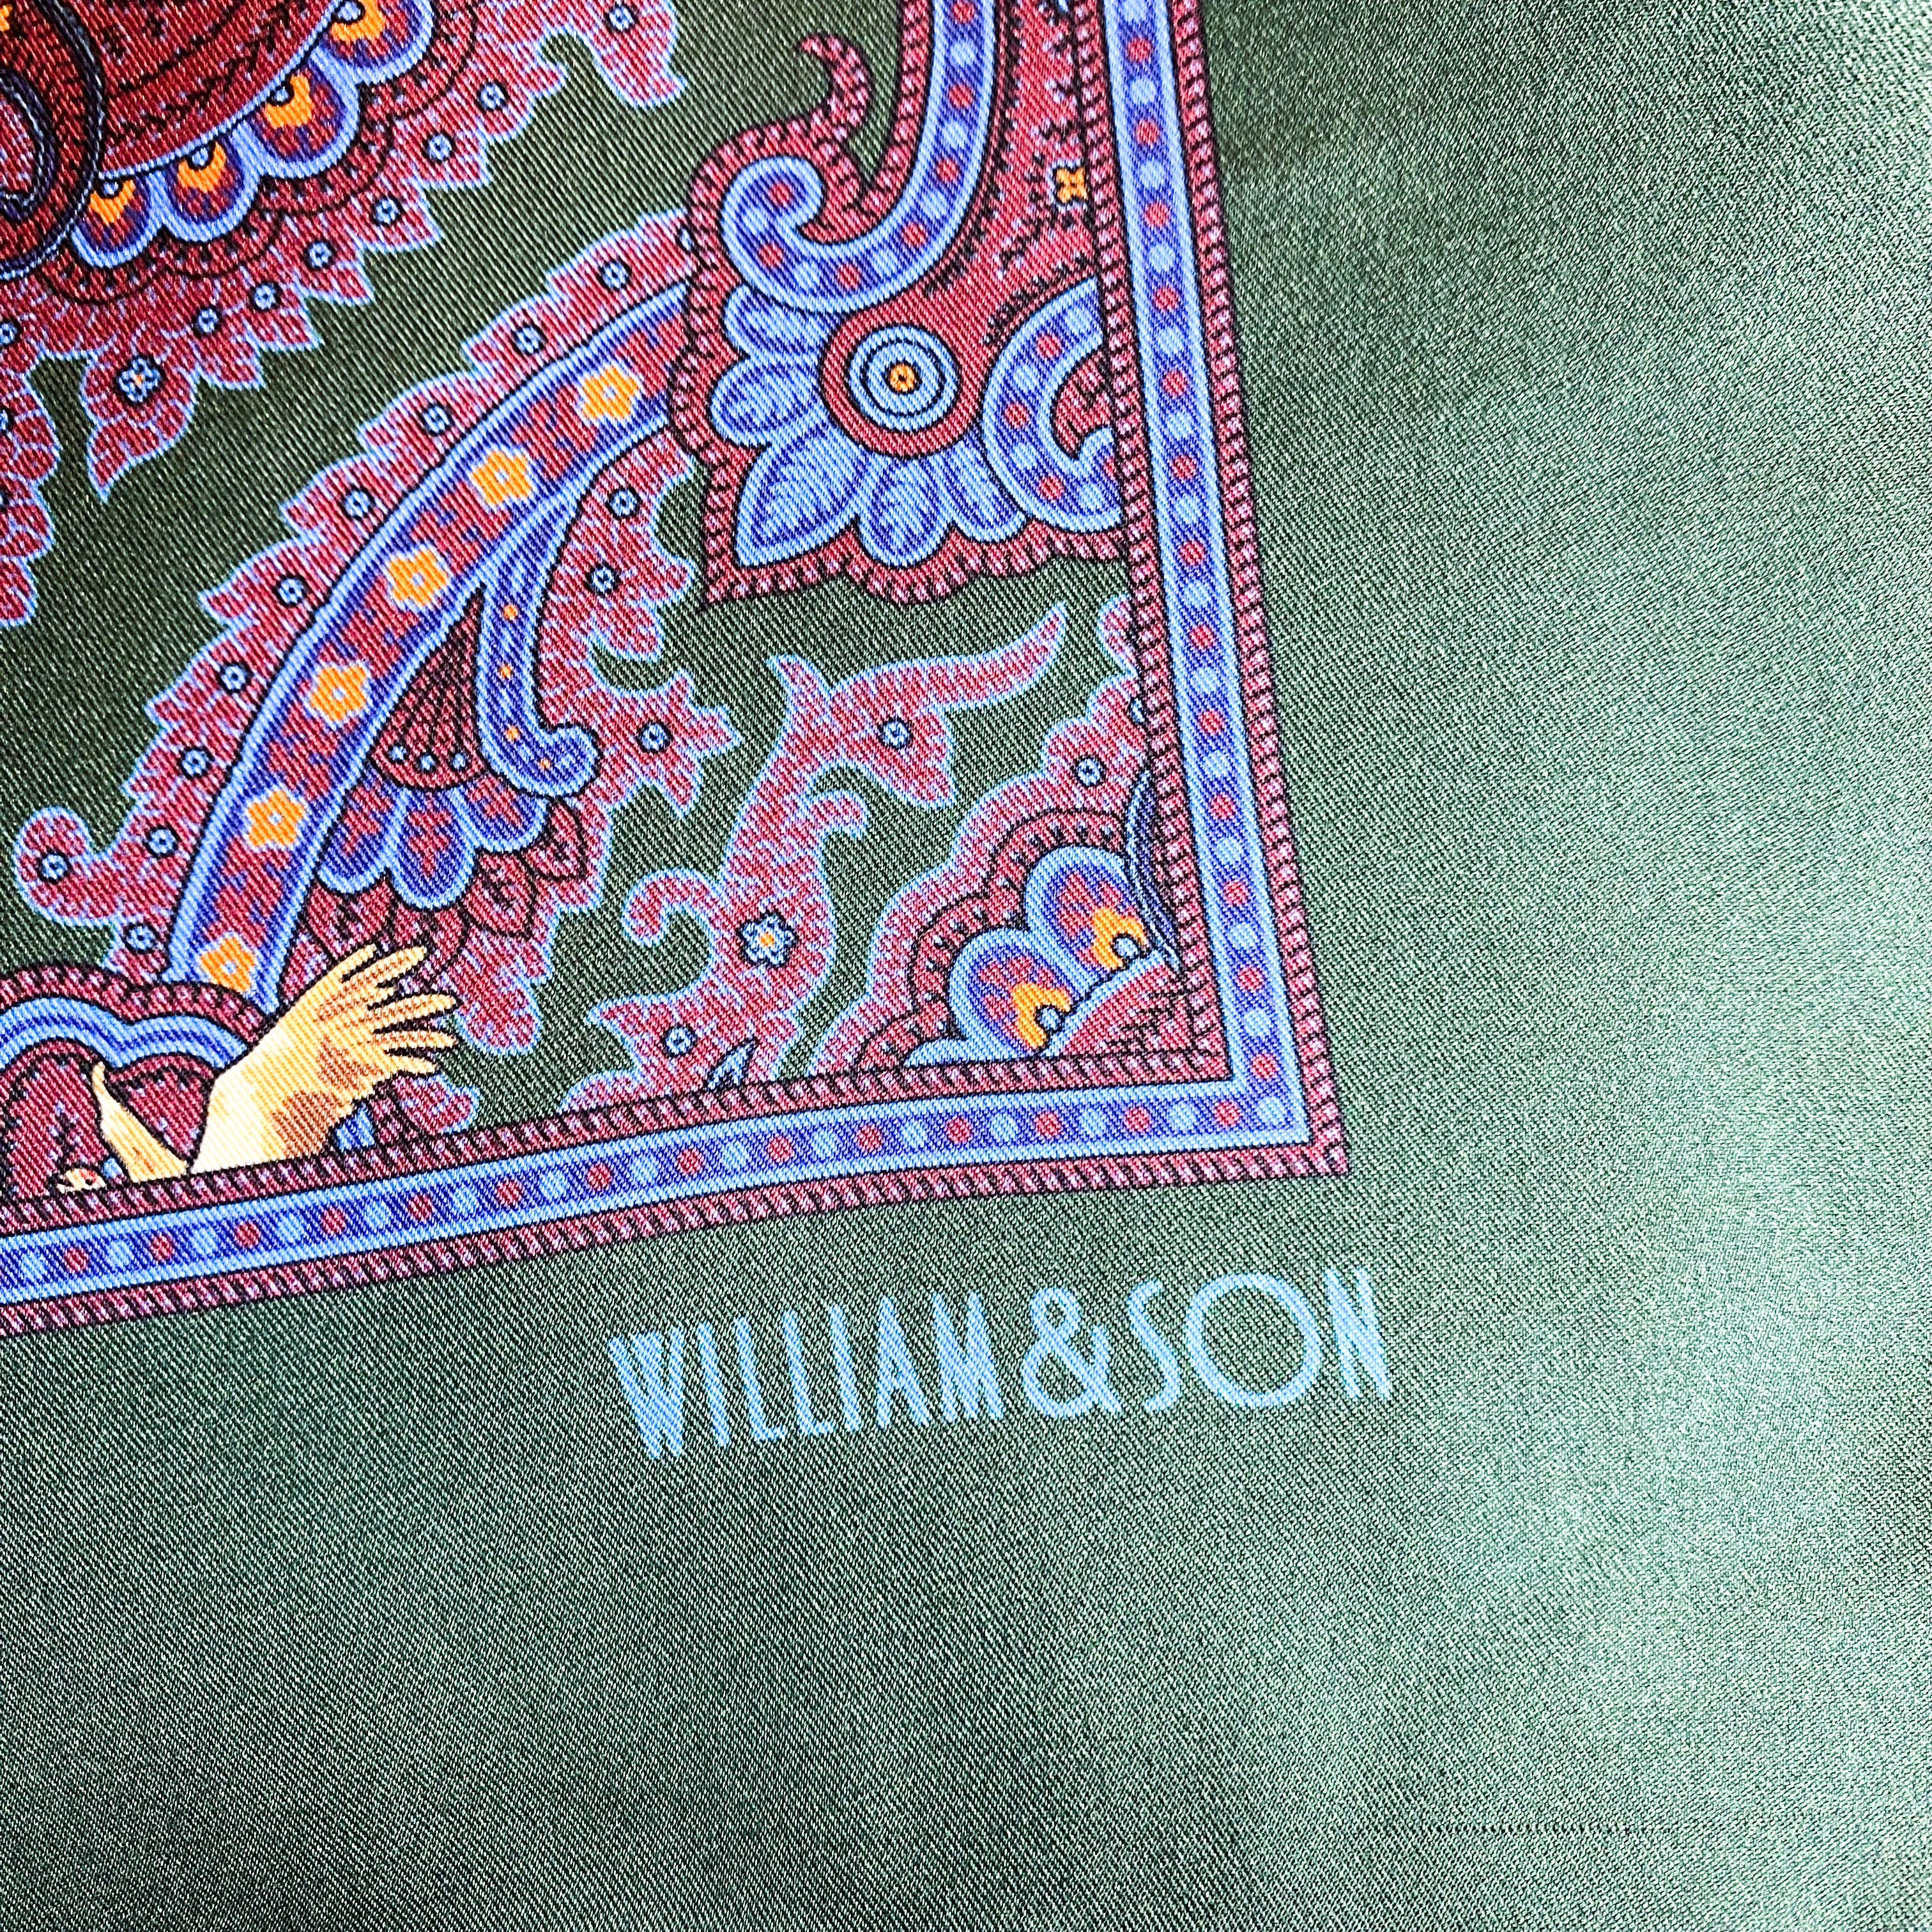 Large William & Son Silk Scarf